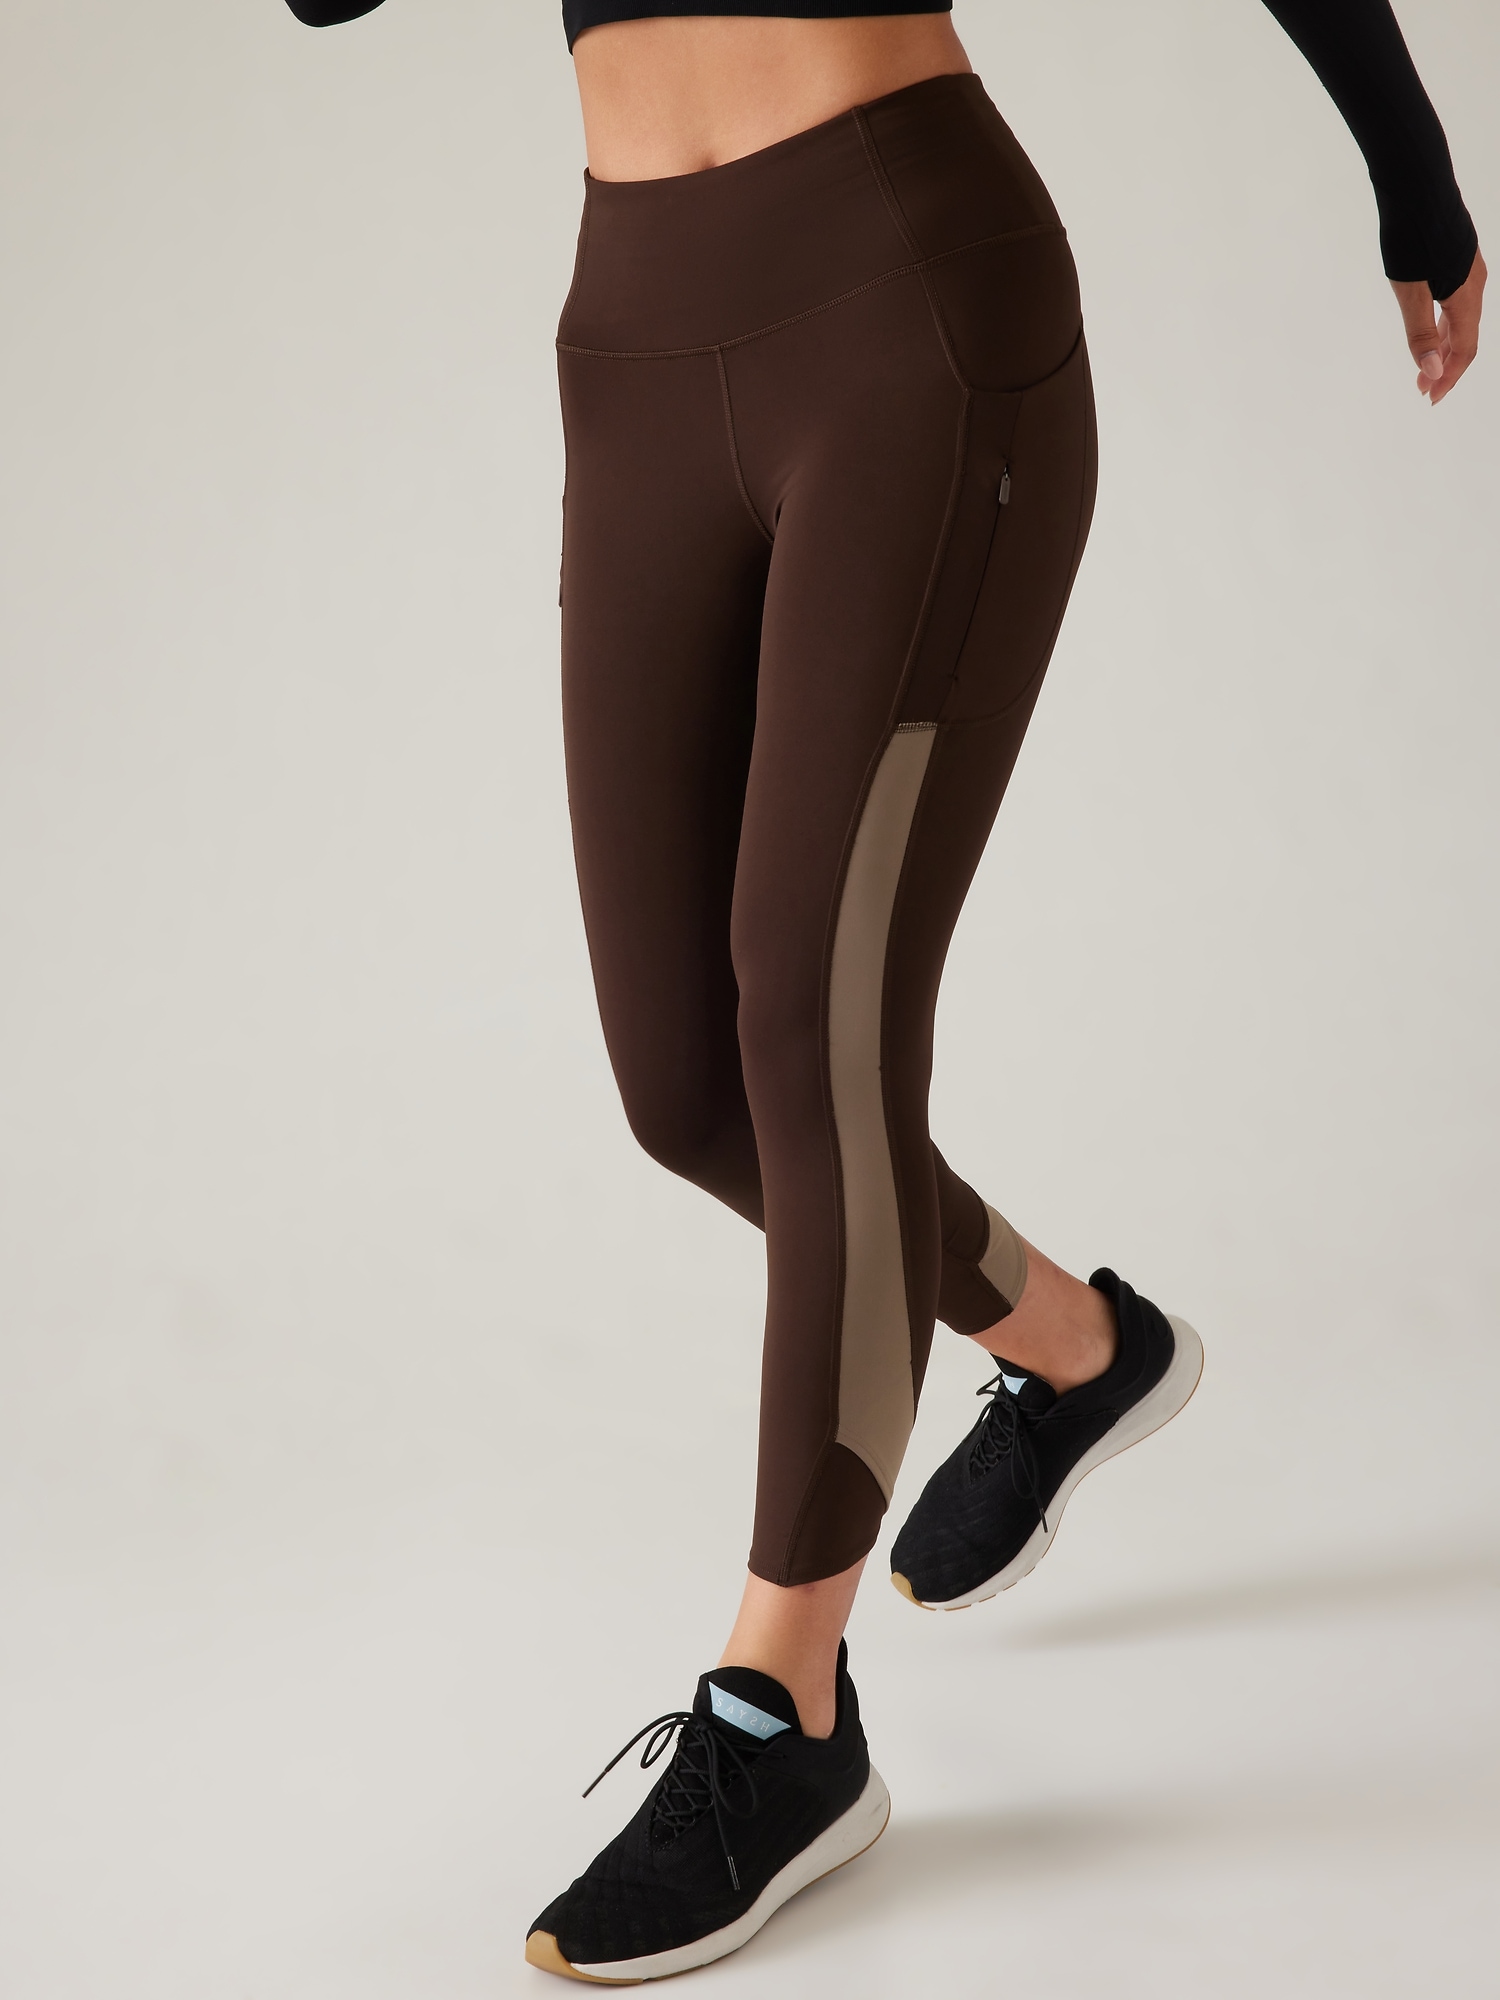 Athleta Women's Straight Up Yoga Pant in Black (MP) Medium - 30” Petite  Inseam for Sale in Boston, MA - OfferUp